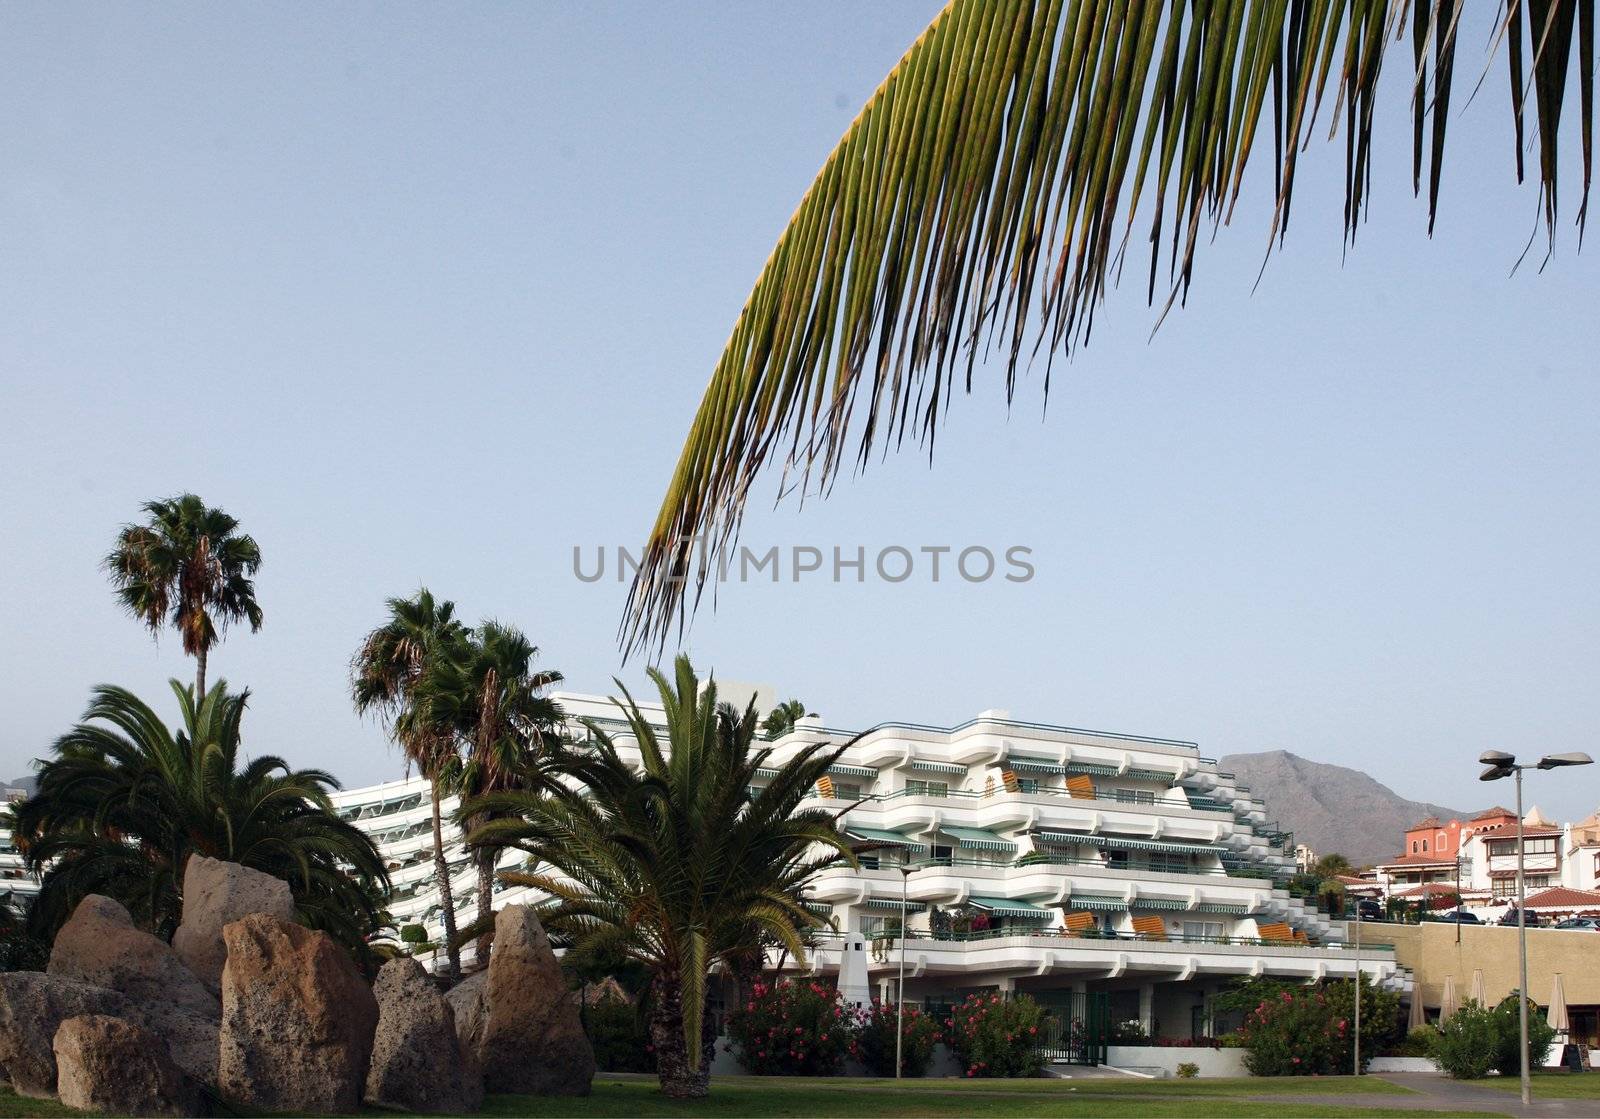 Hotel on Tenerife by haak78